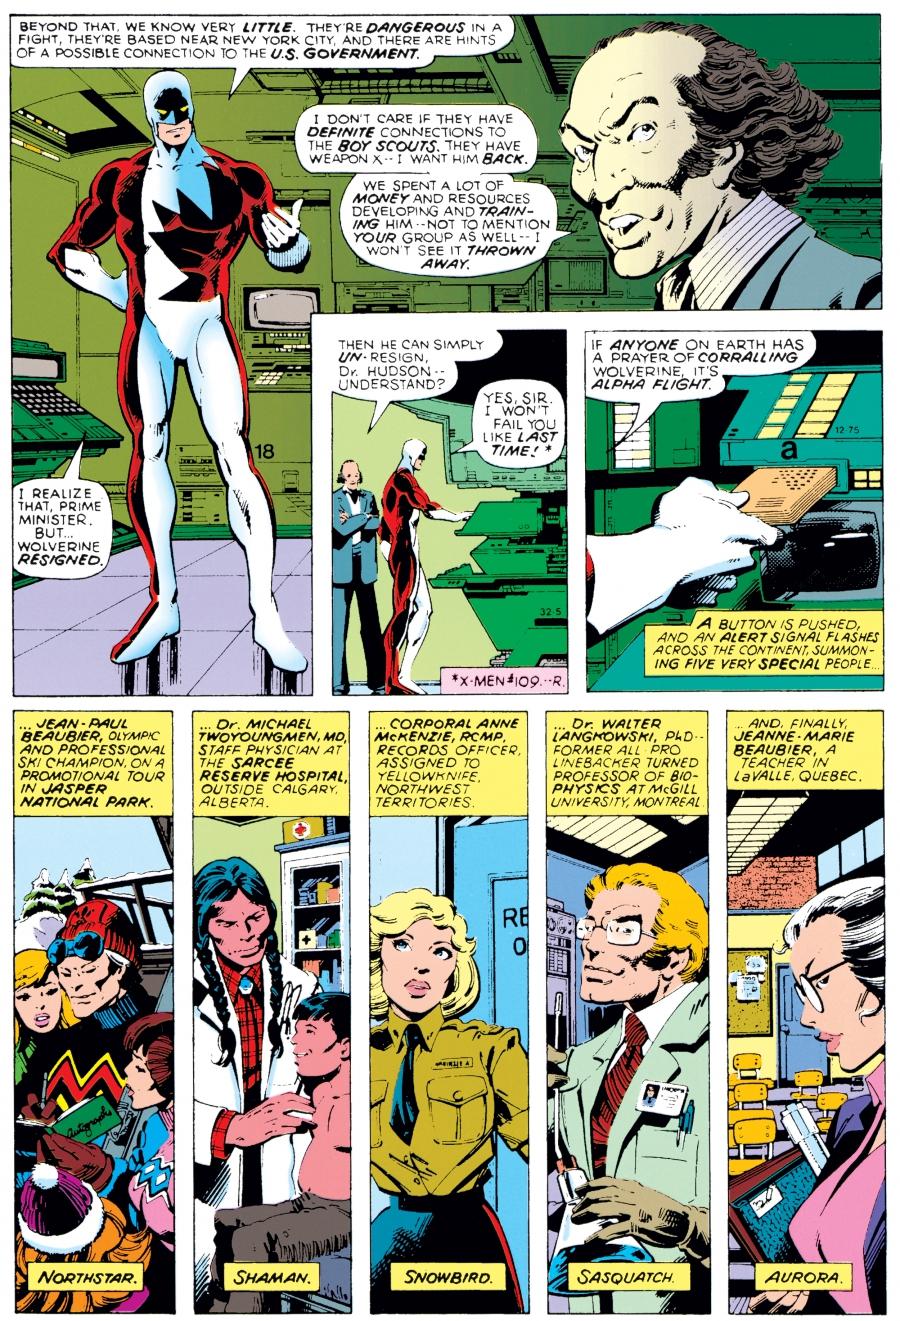 Pierre Trudeau's Marvel Comics debut in Uncanny X-Men #120